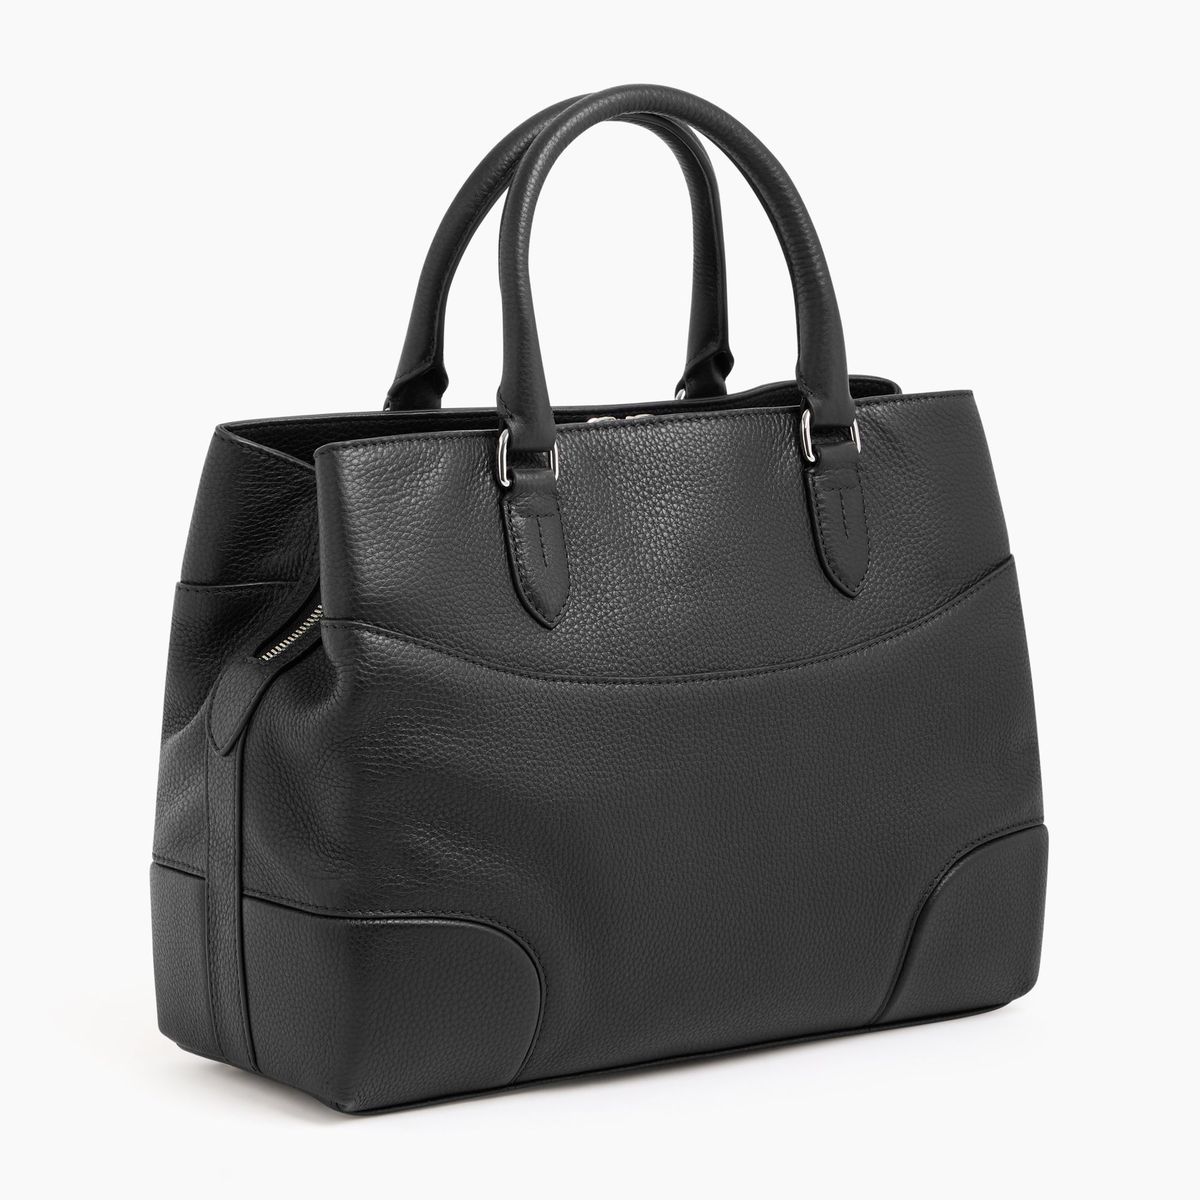 Romy medium smooth grained leather handbag – Le Tanneur